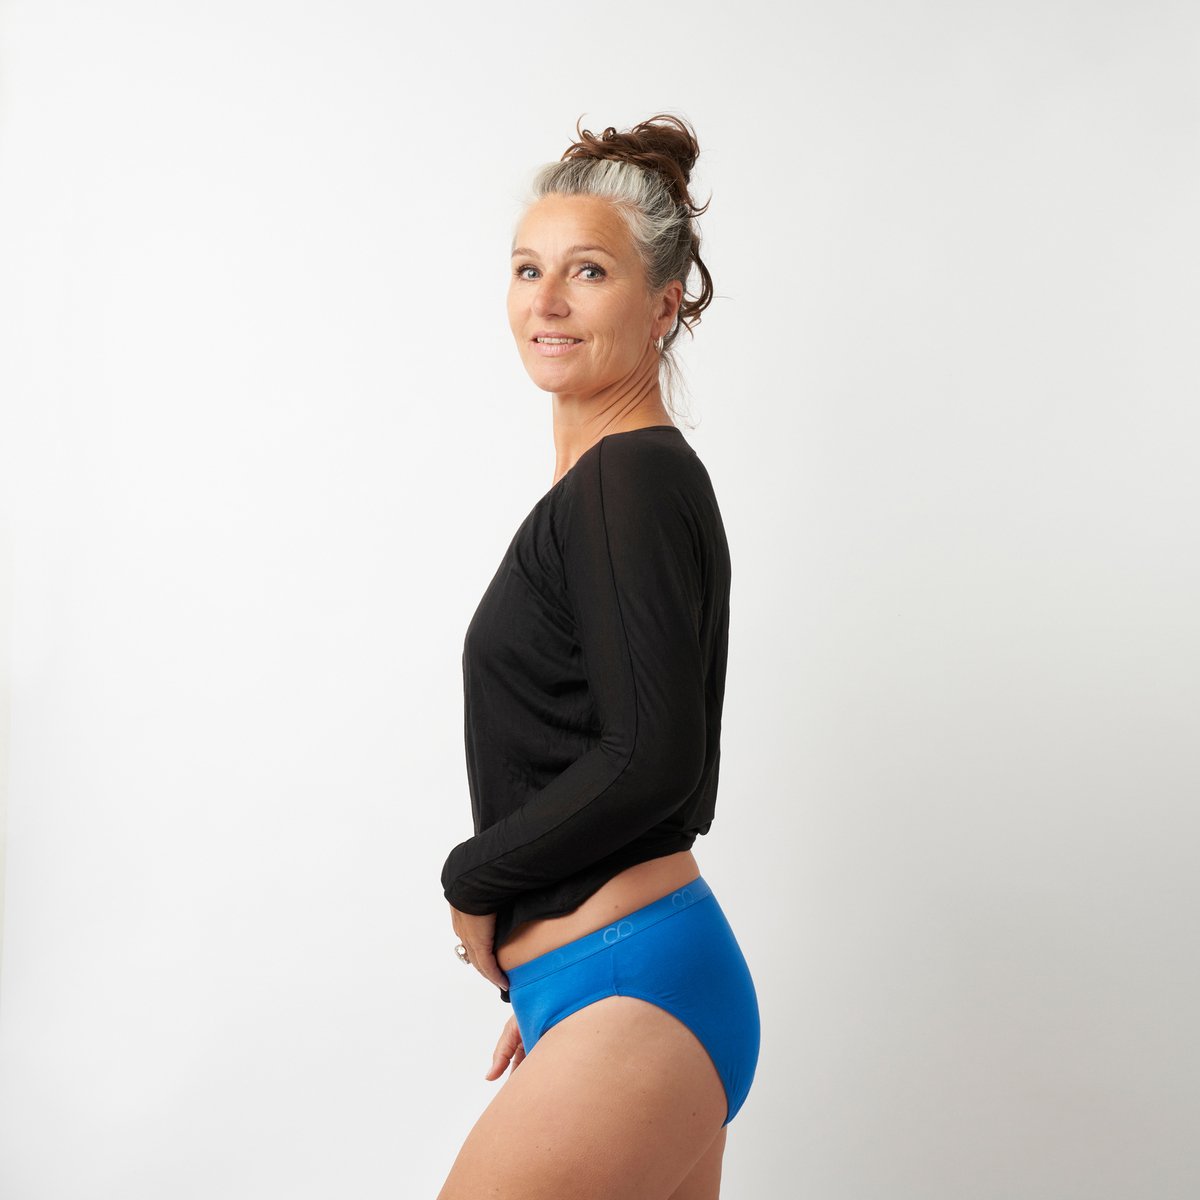 Moodies Undies menstruatie & incontinentie ondergoed - Bamboe Bikini model Broekje - moderate kruisje - Blauw - maat L